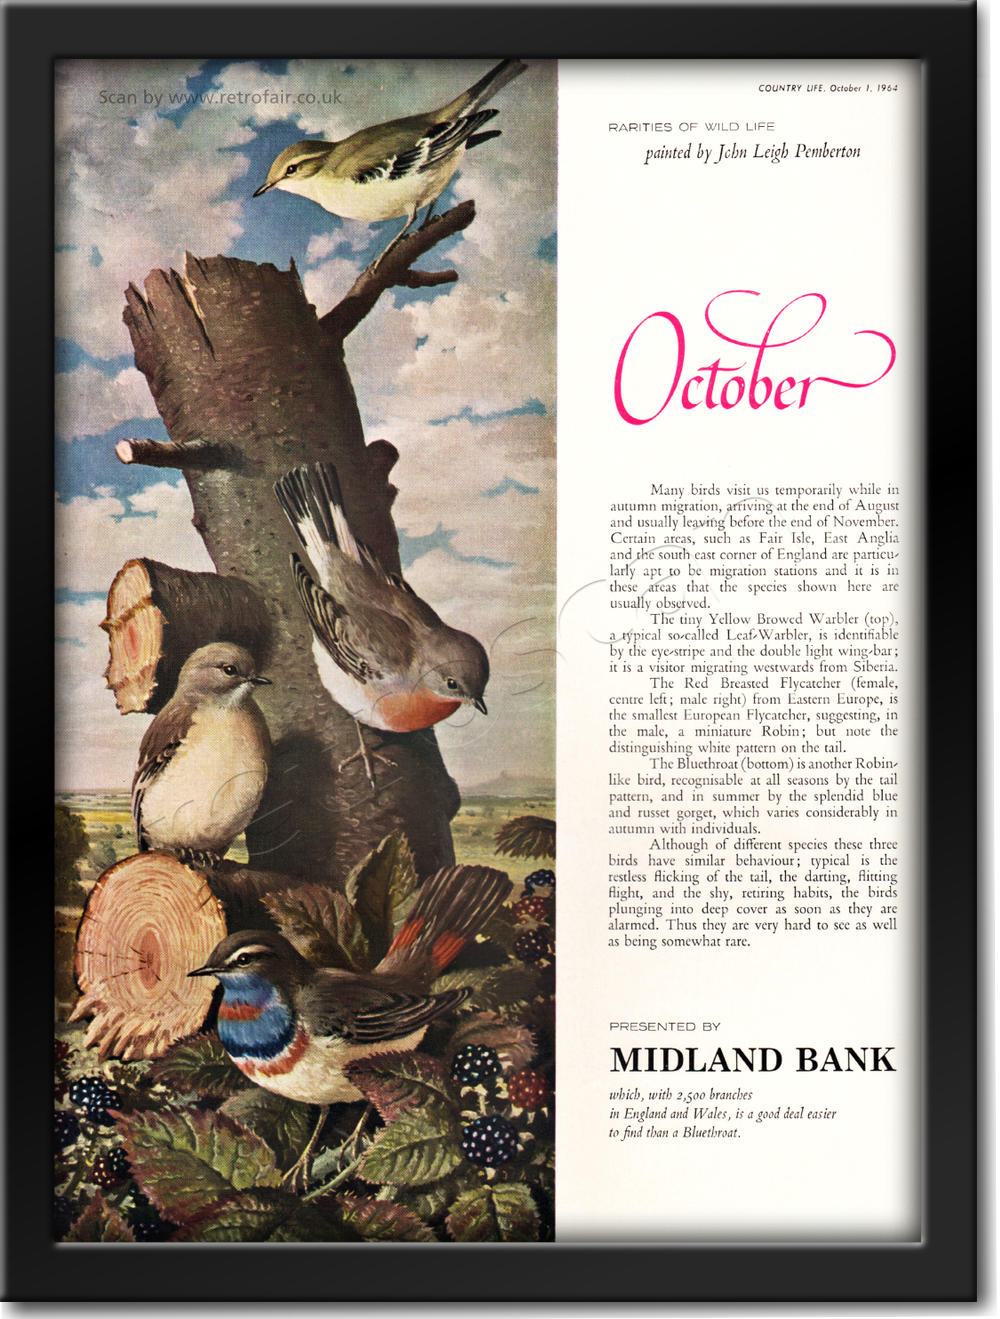 1964 vintage Midland Bank - October advert